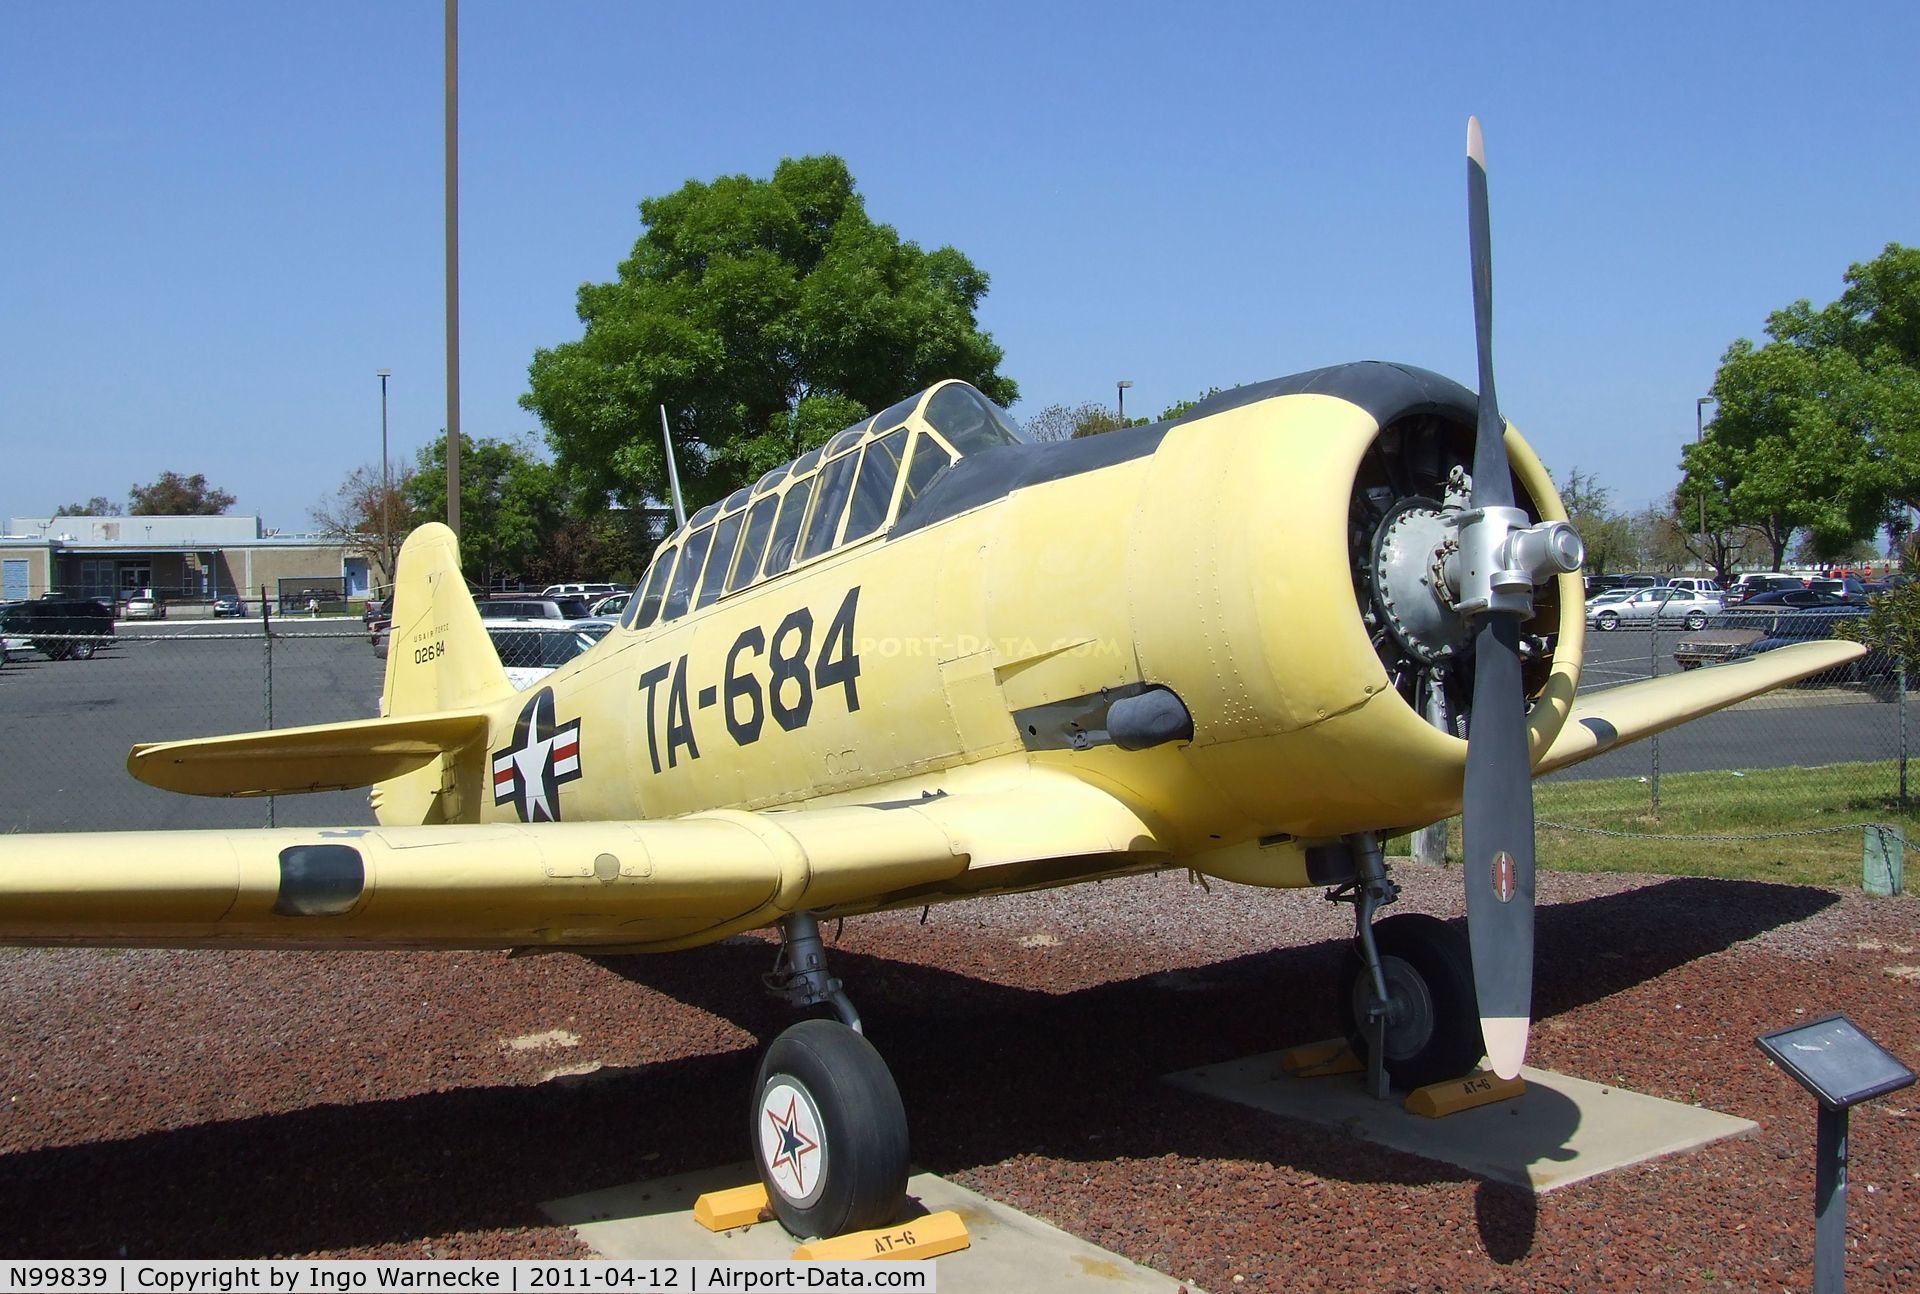 N99839, North American Harvard II C/N 66-2684, North American Harvard II (displayed as post-war AT-6 Texan 02-684/TA-684) at the Castle Air Museum, Atwater CA